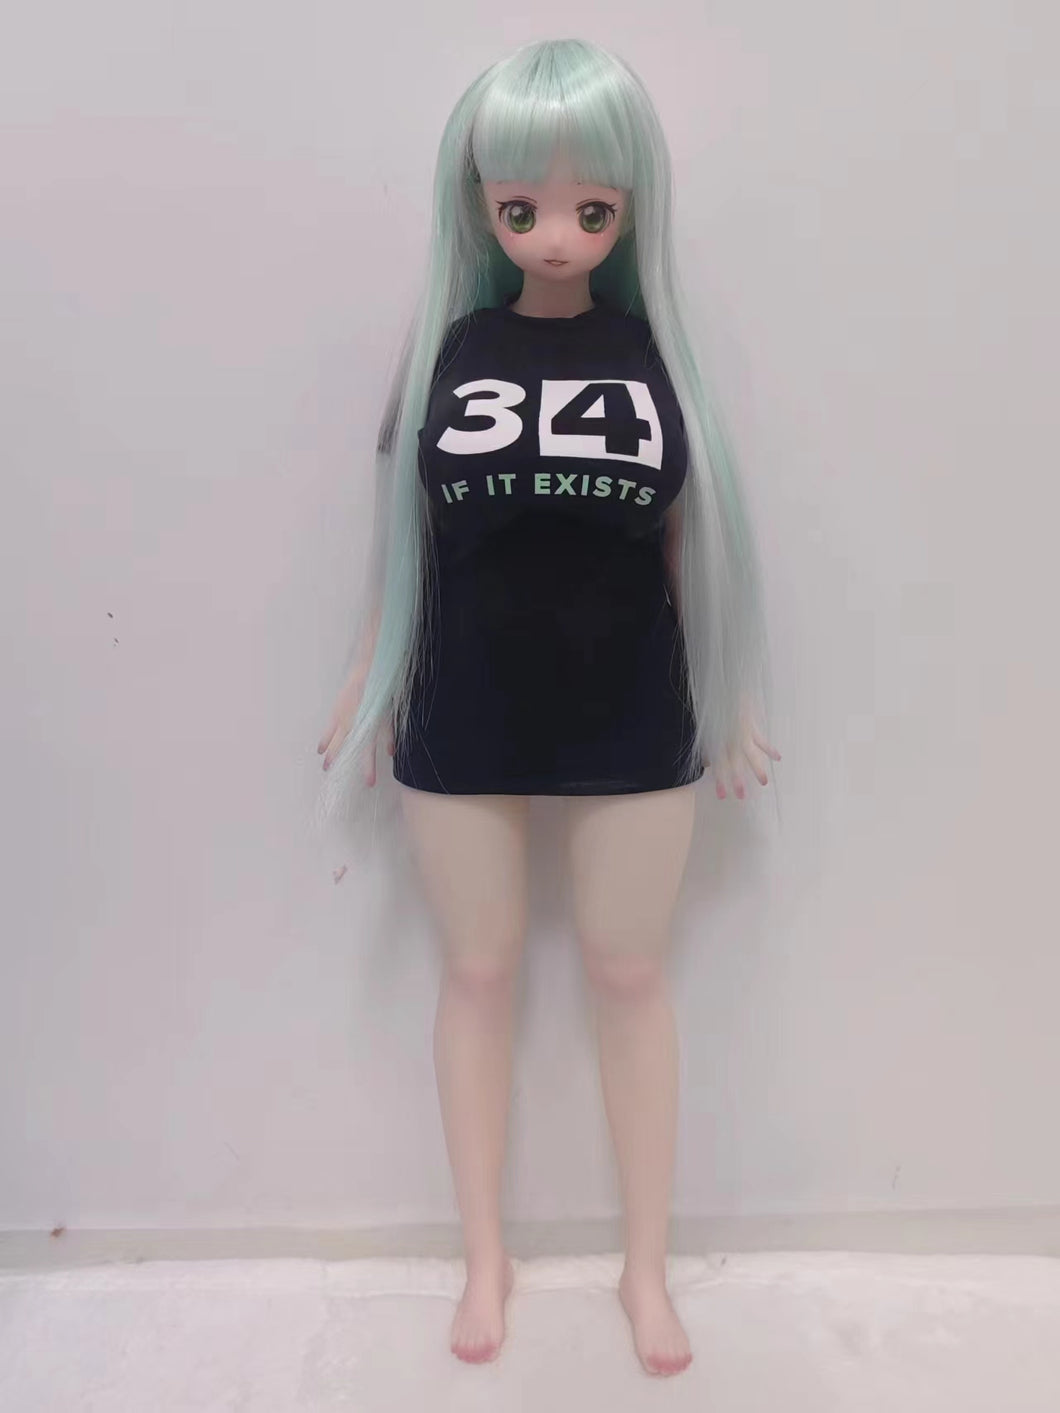 Rule34 tan Doll - Kanako.store